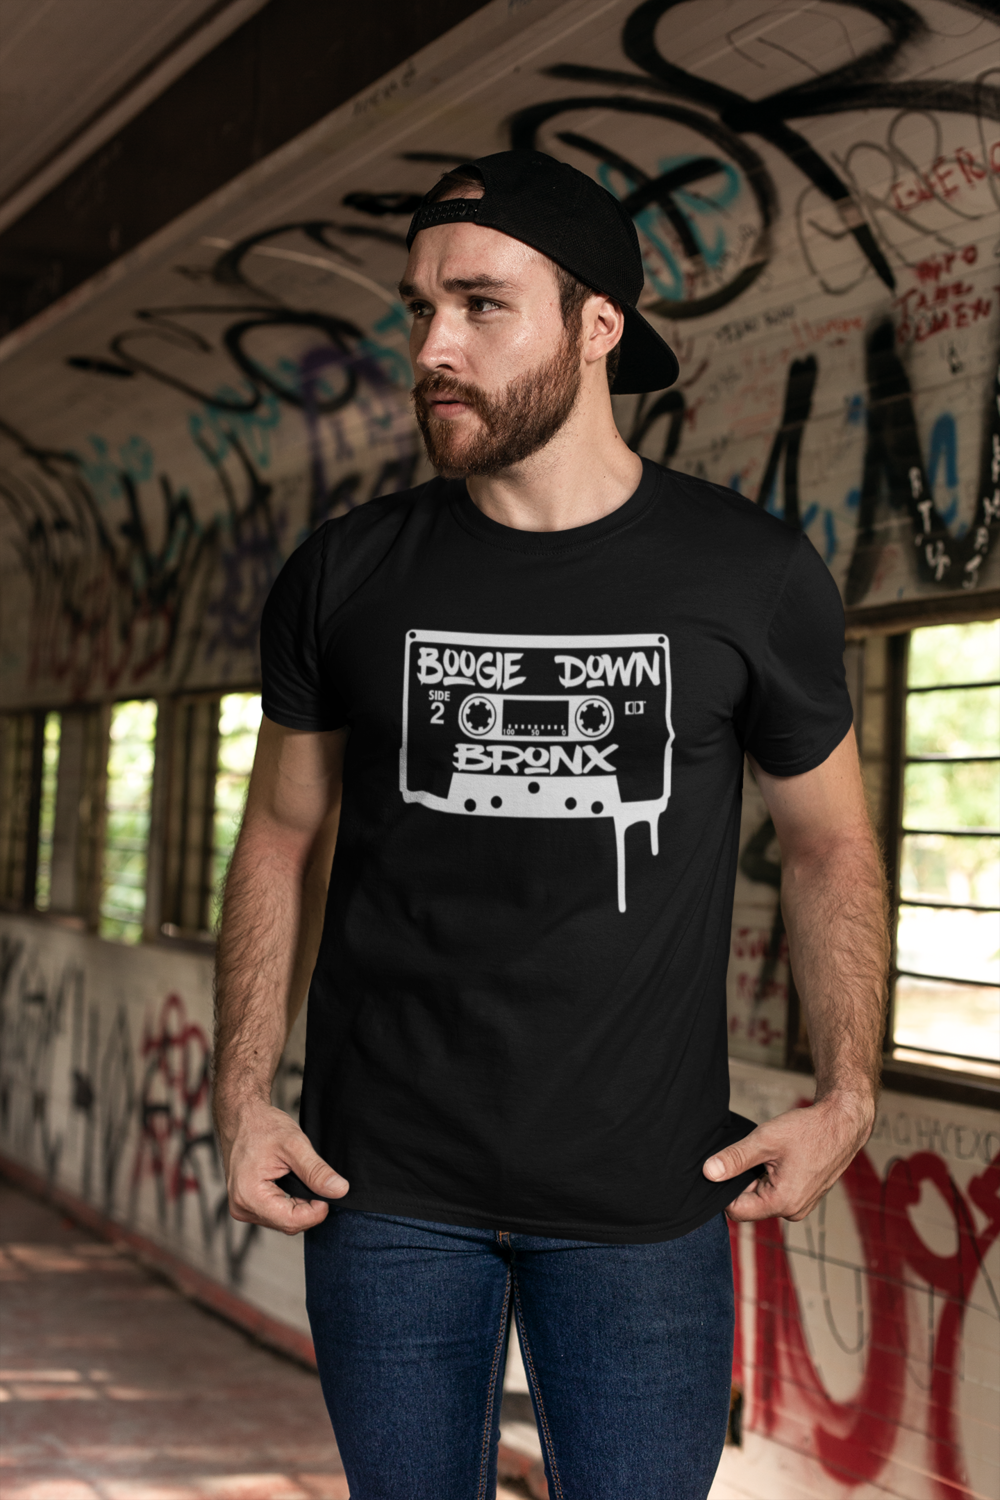 Boogie Down Bronx T-shirt